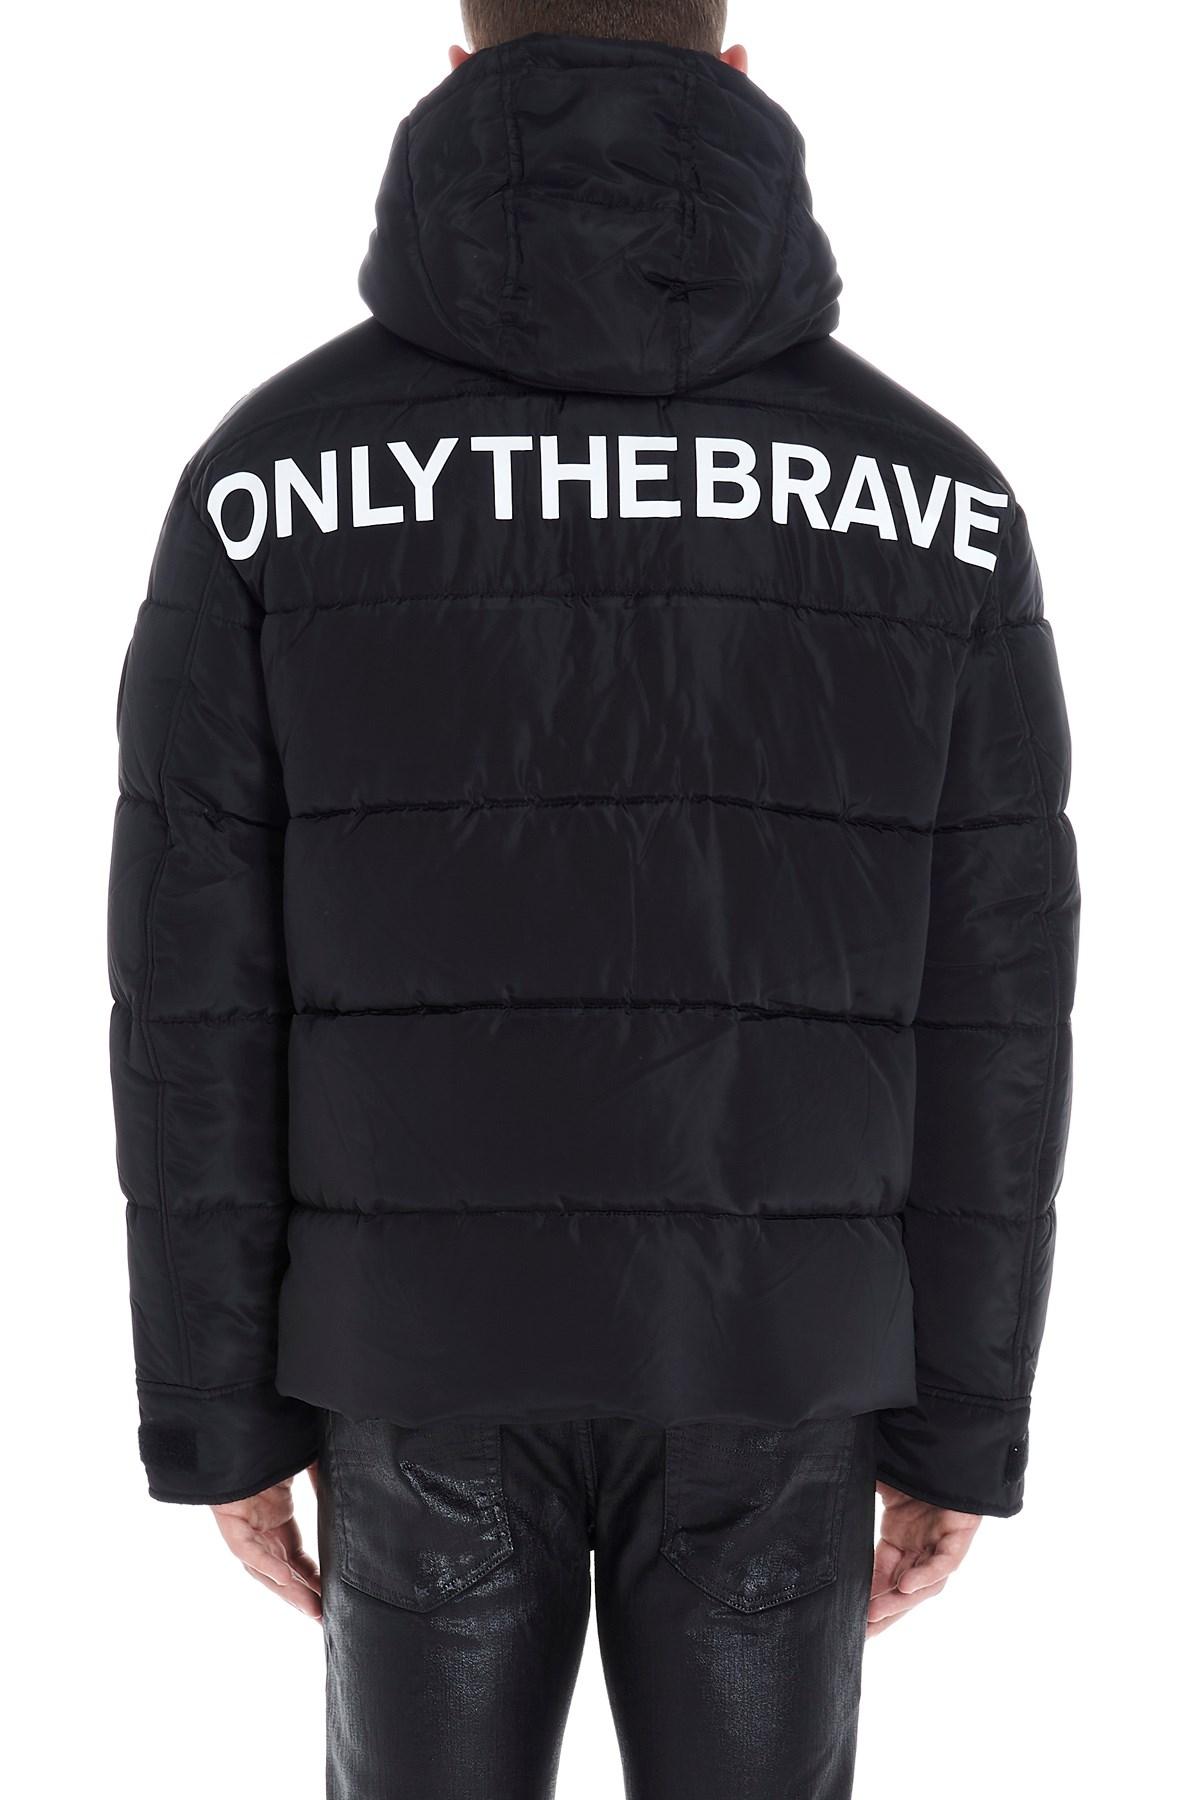 DIESEL 'only The Brave' Down Jacket in Black for Men - Lyst